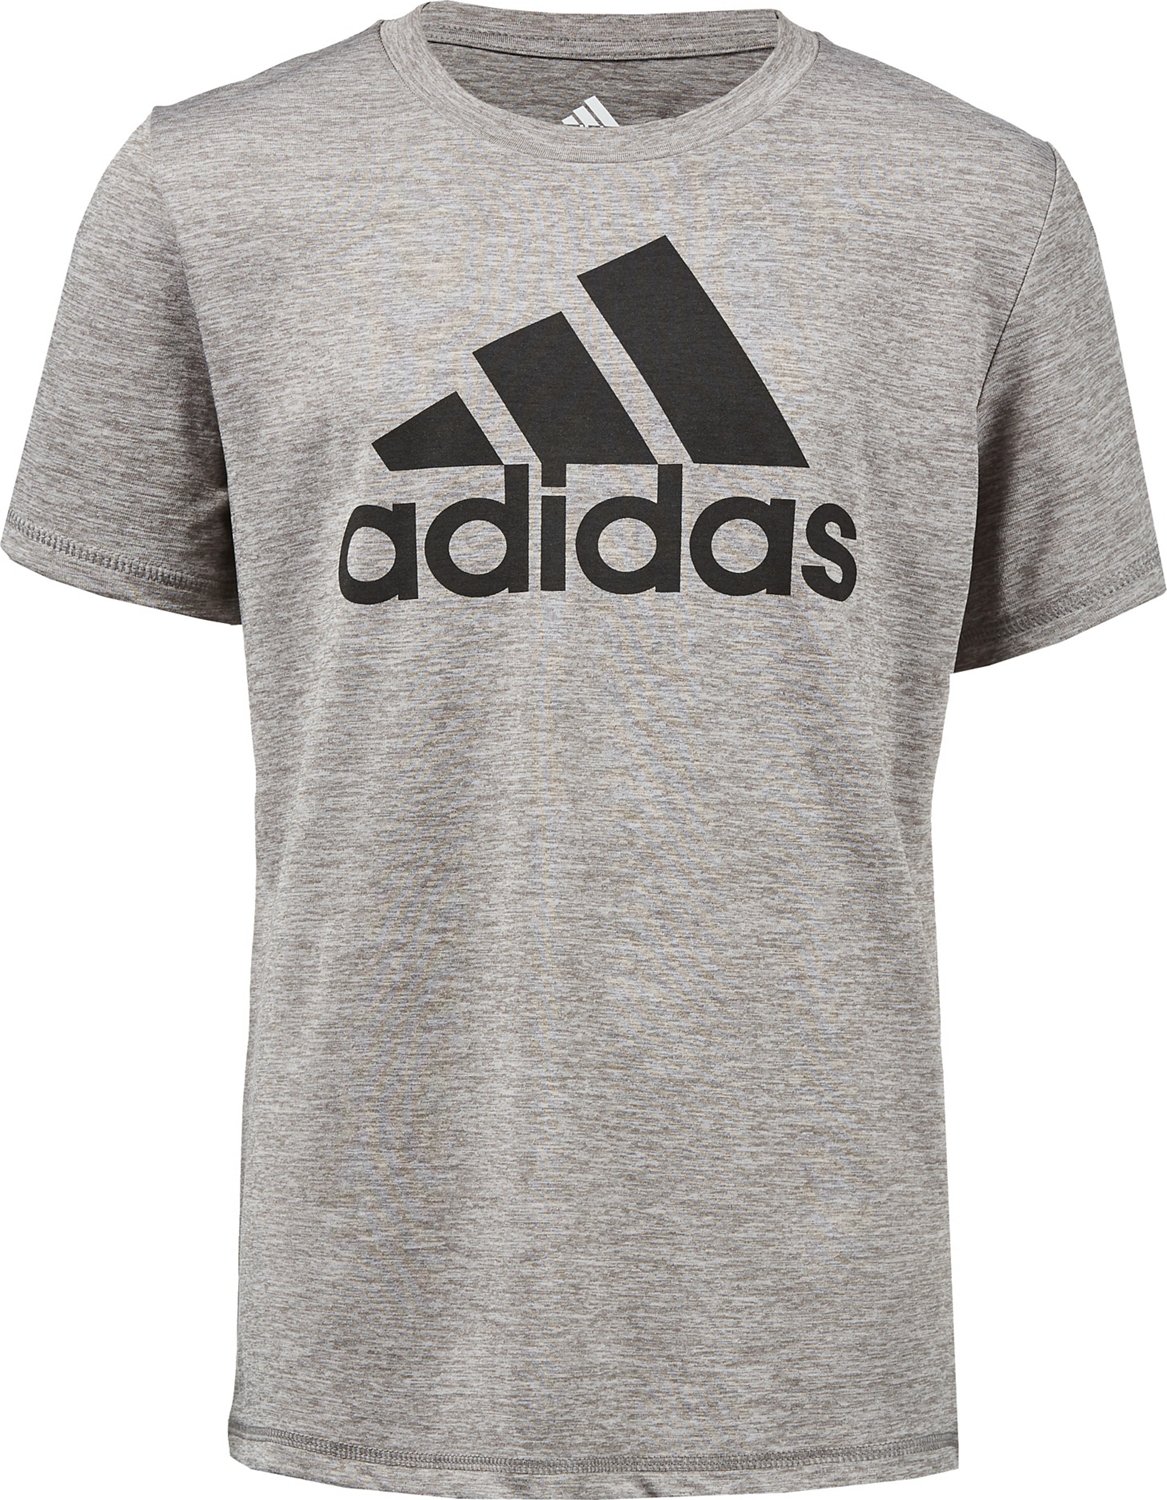 Men's Houston Dynamo adidas Gray Fabrication Ultimate climalite T-Shirt